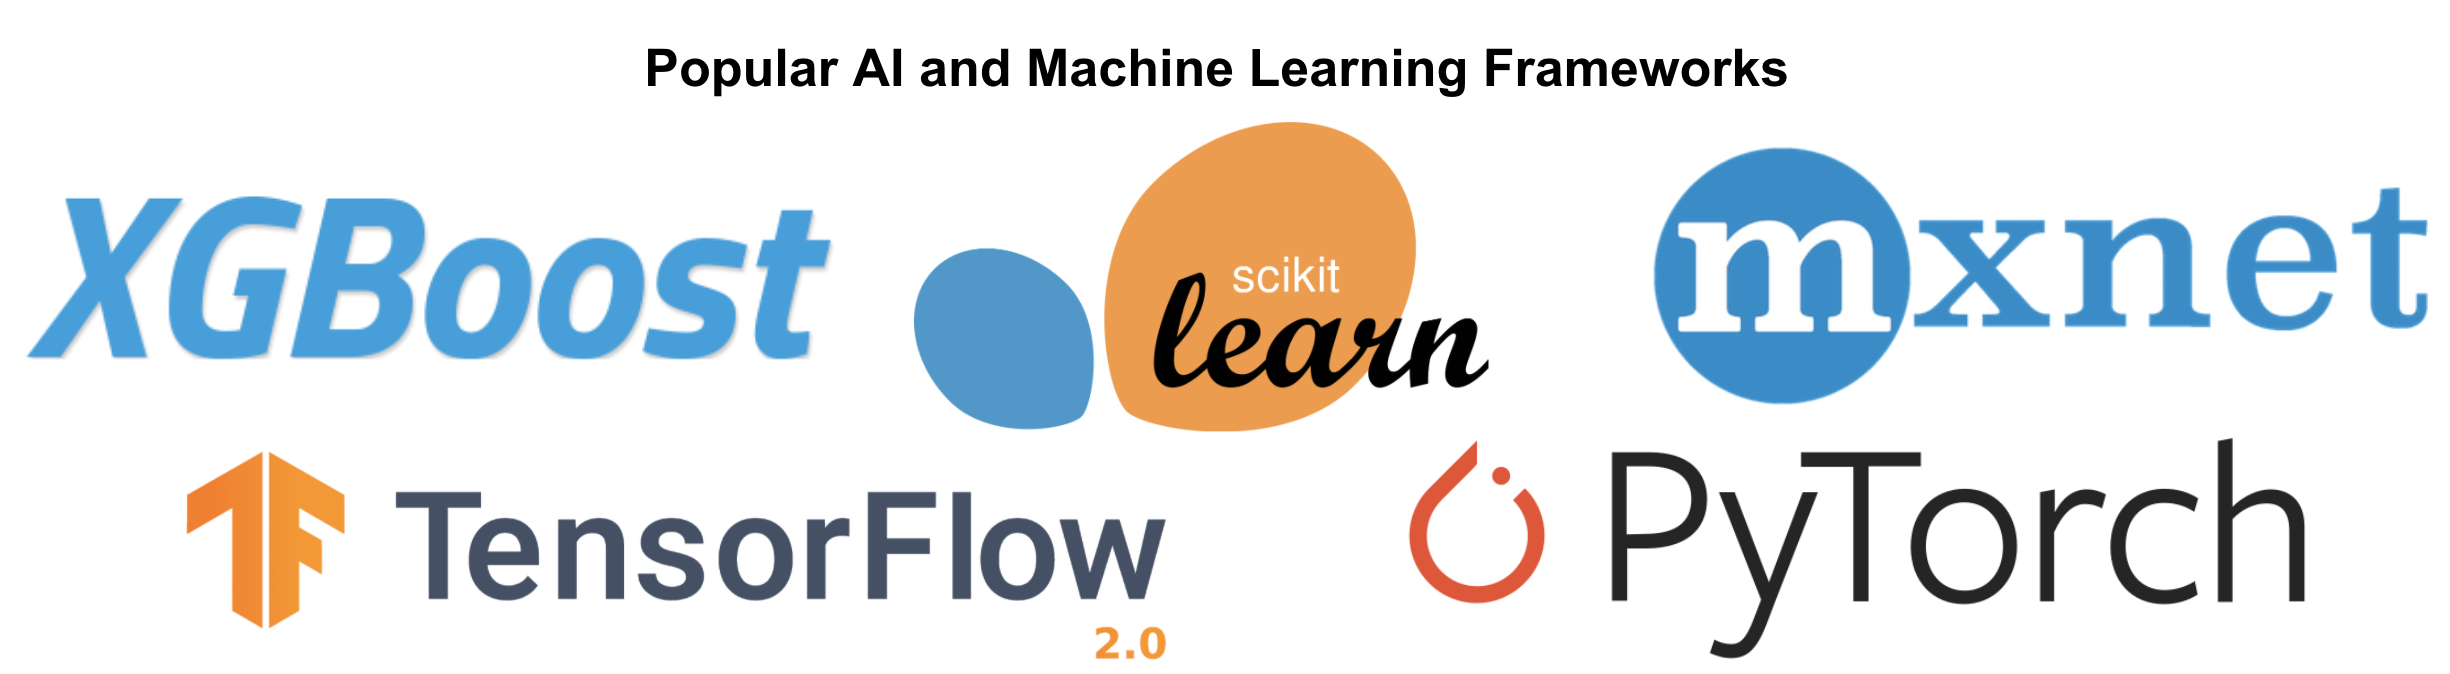 Popular AI and Machine Learning Frameworks